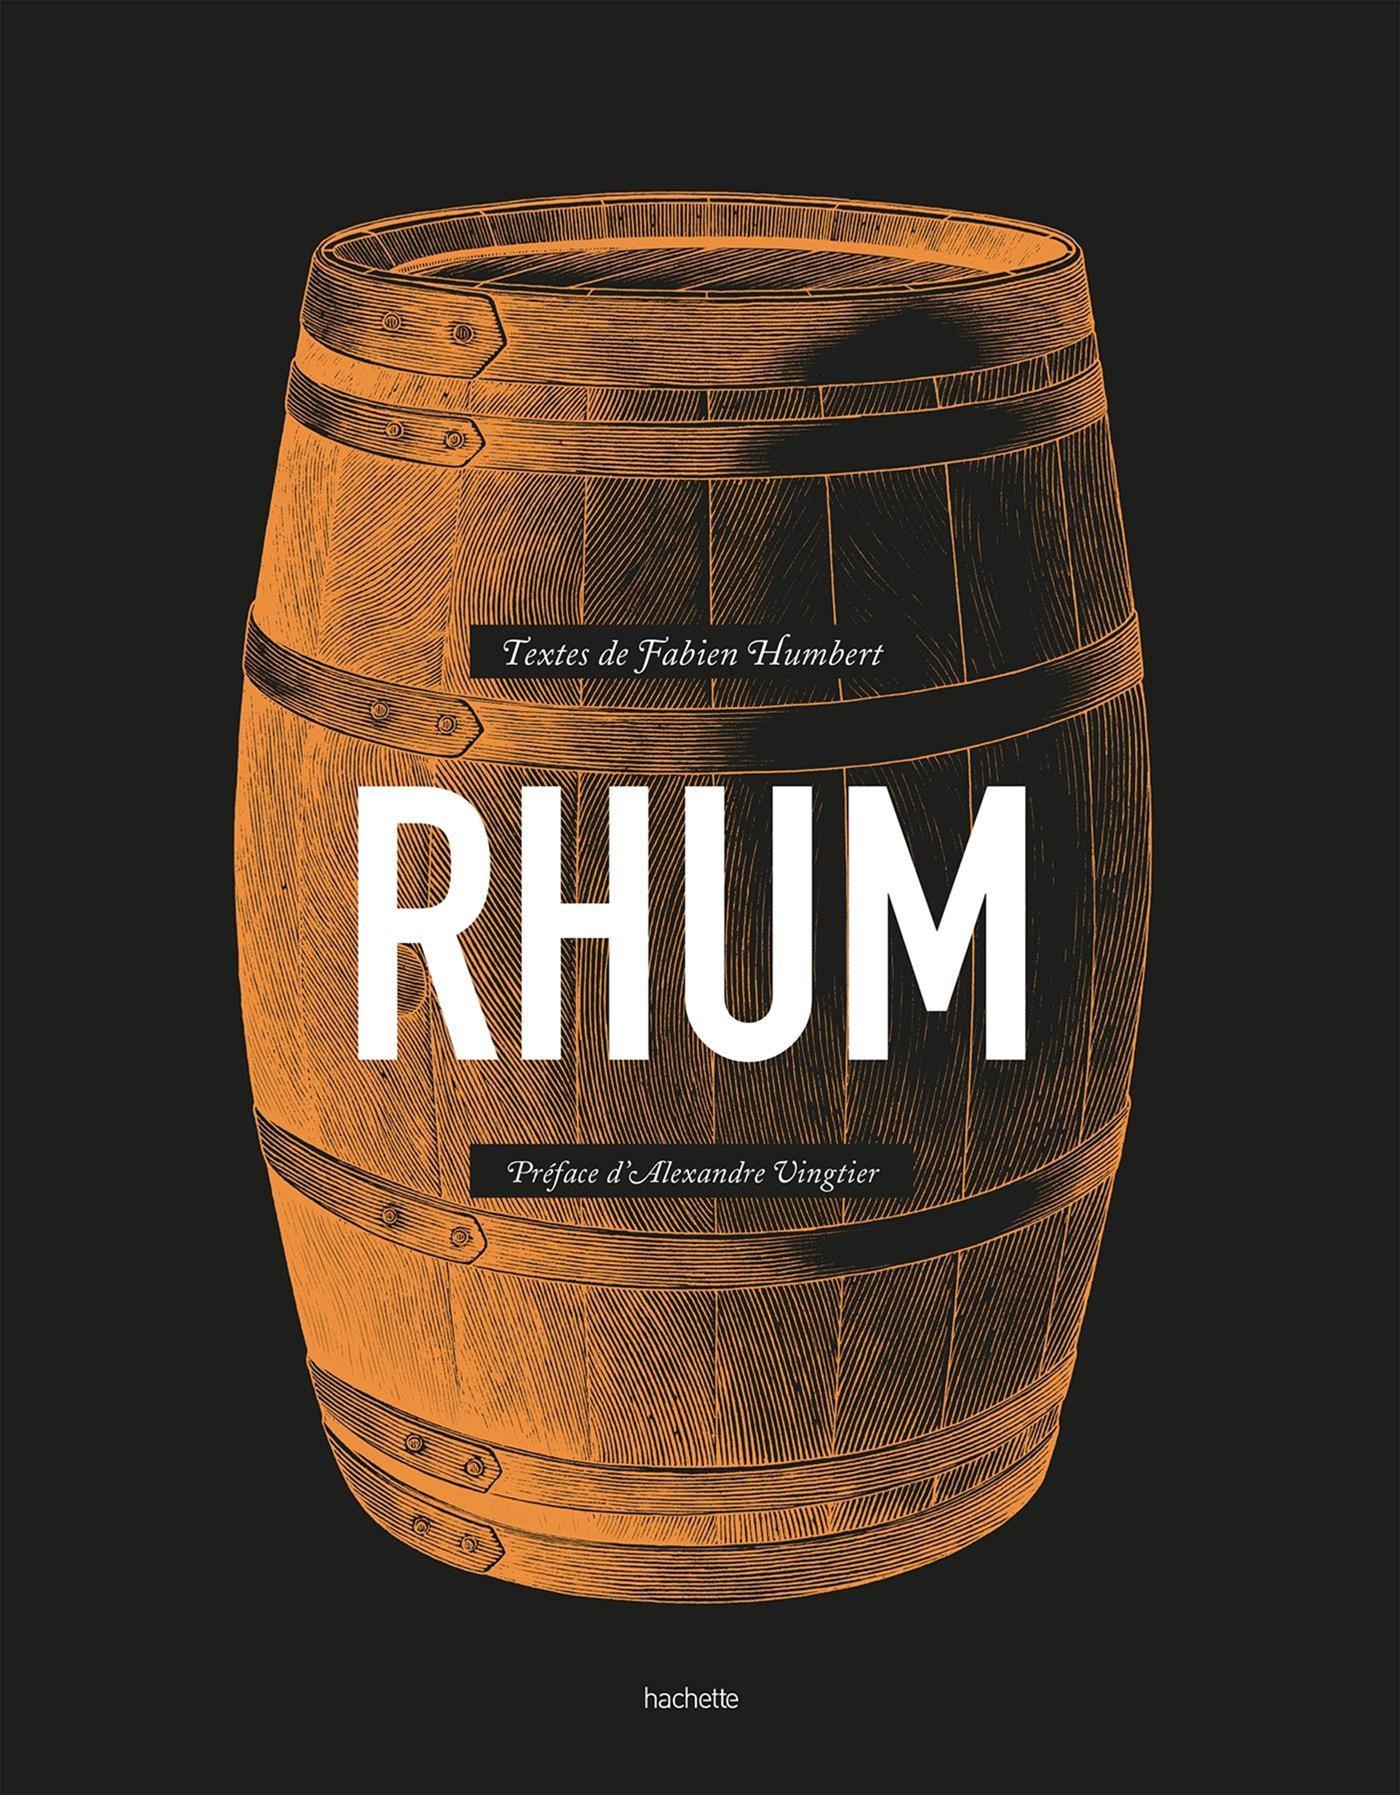 Rhum    - Hachette Ed. - Livre d'alcool et boisson - 